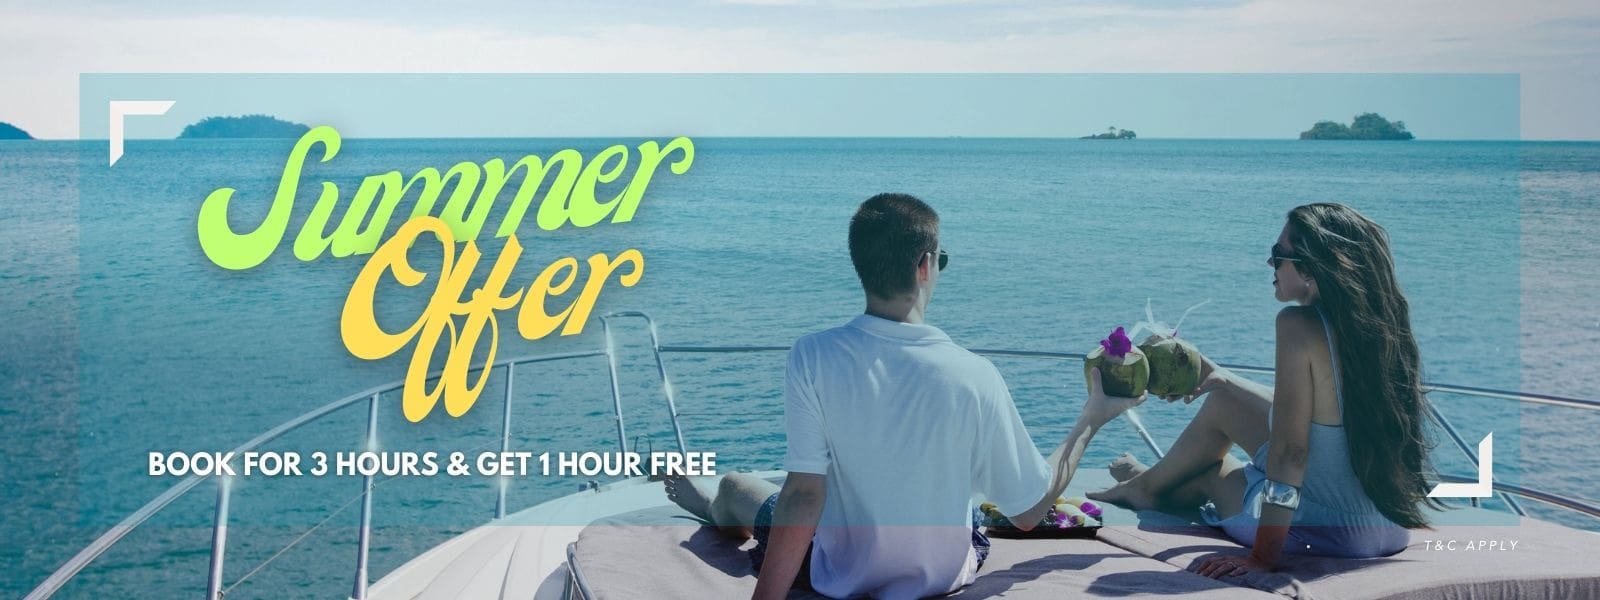 summer offer yacht rental booking in dubai